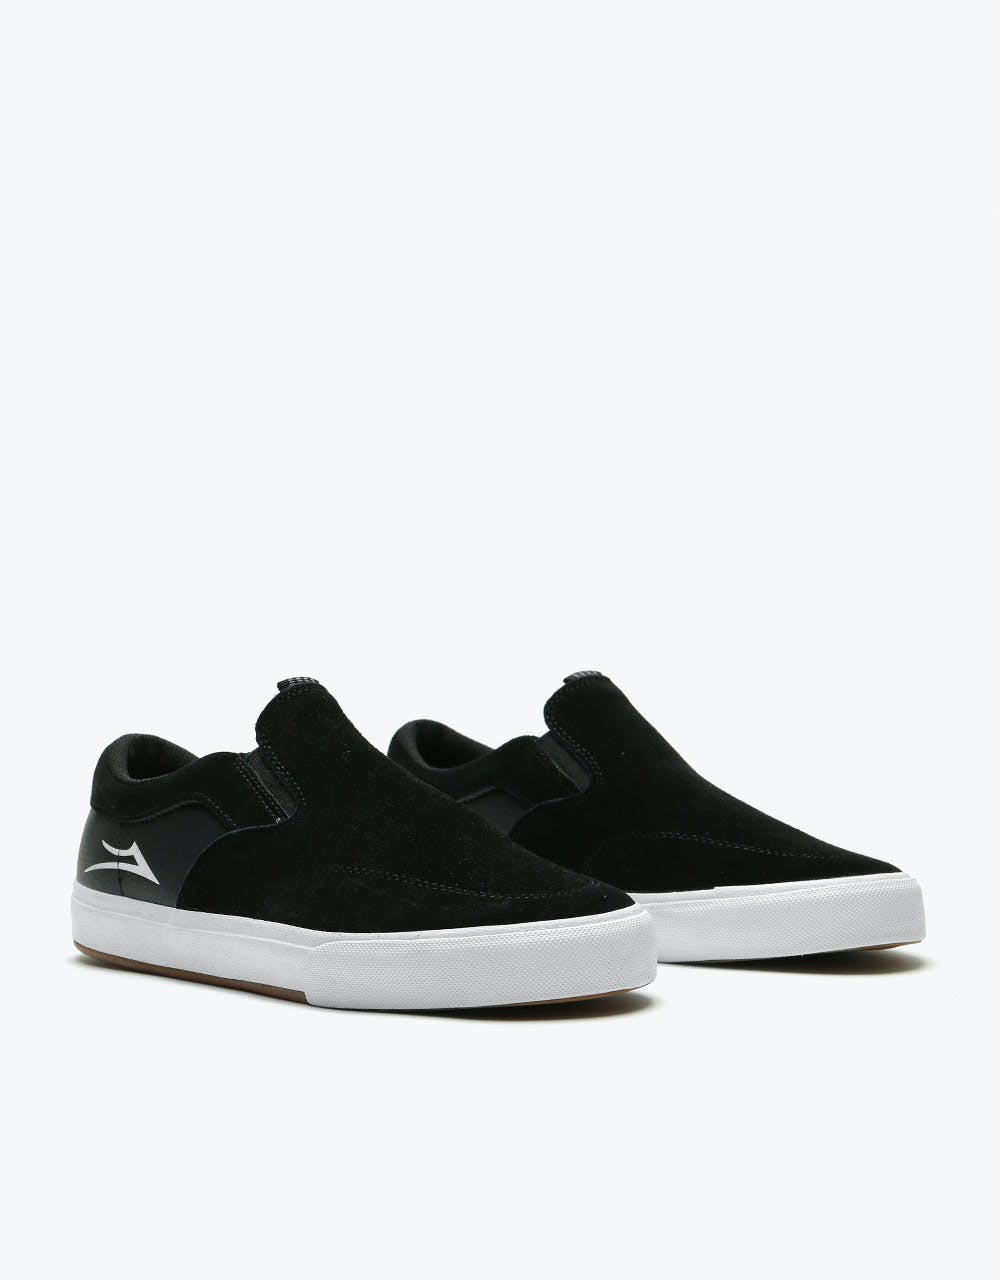 Lakai Owen VLK Skate Shoes - Black Suede